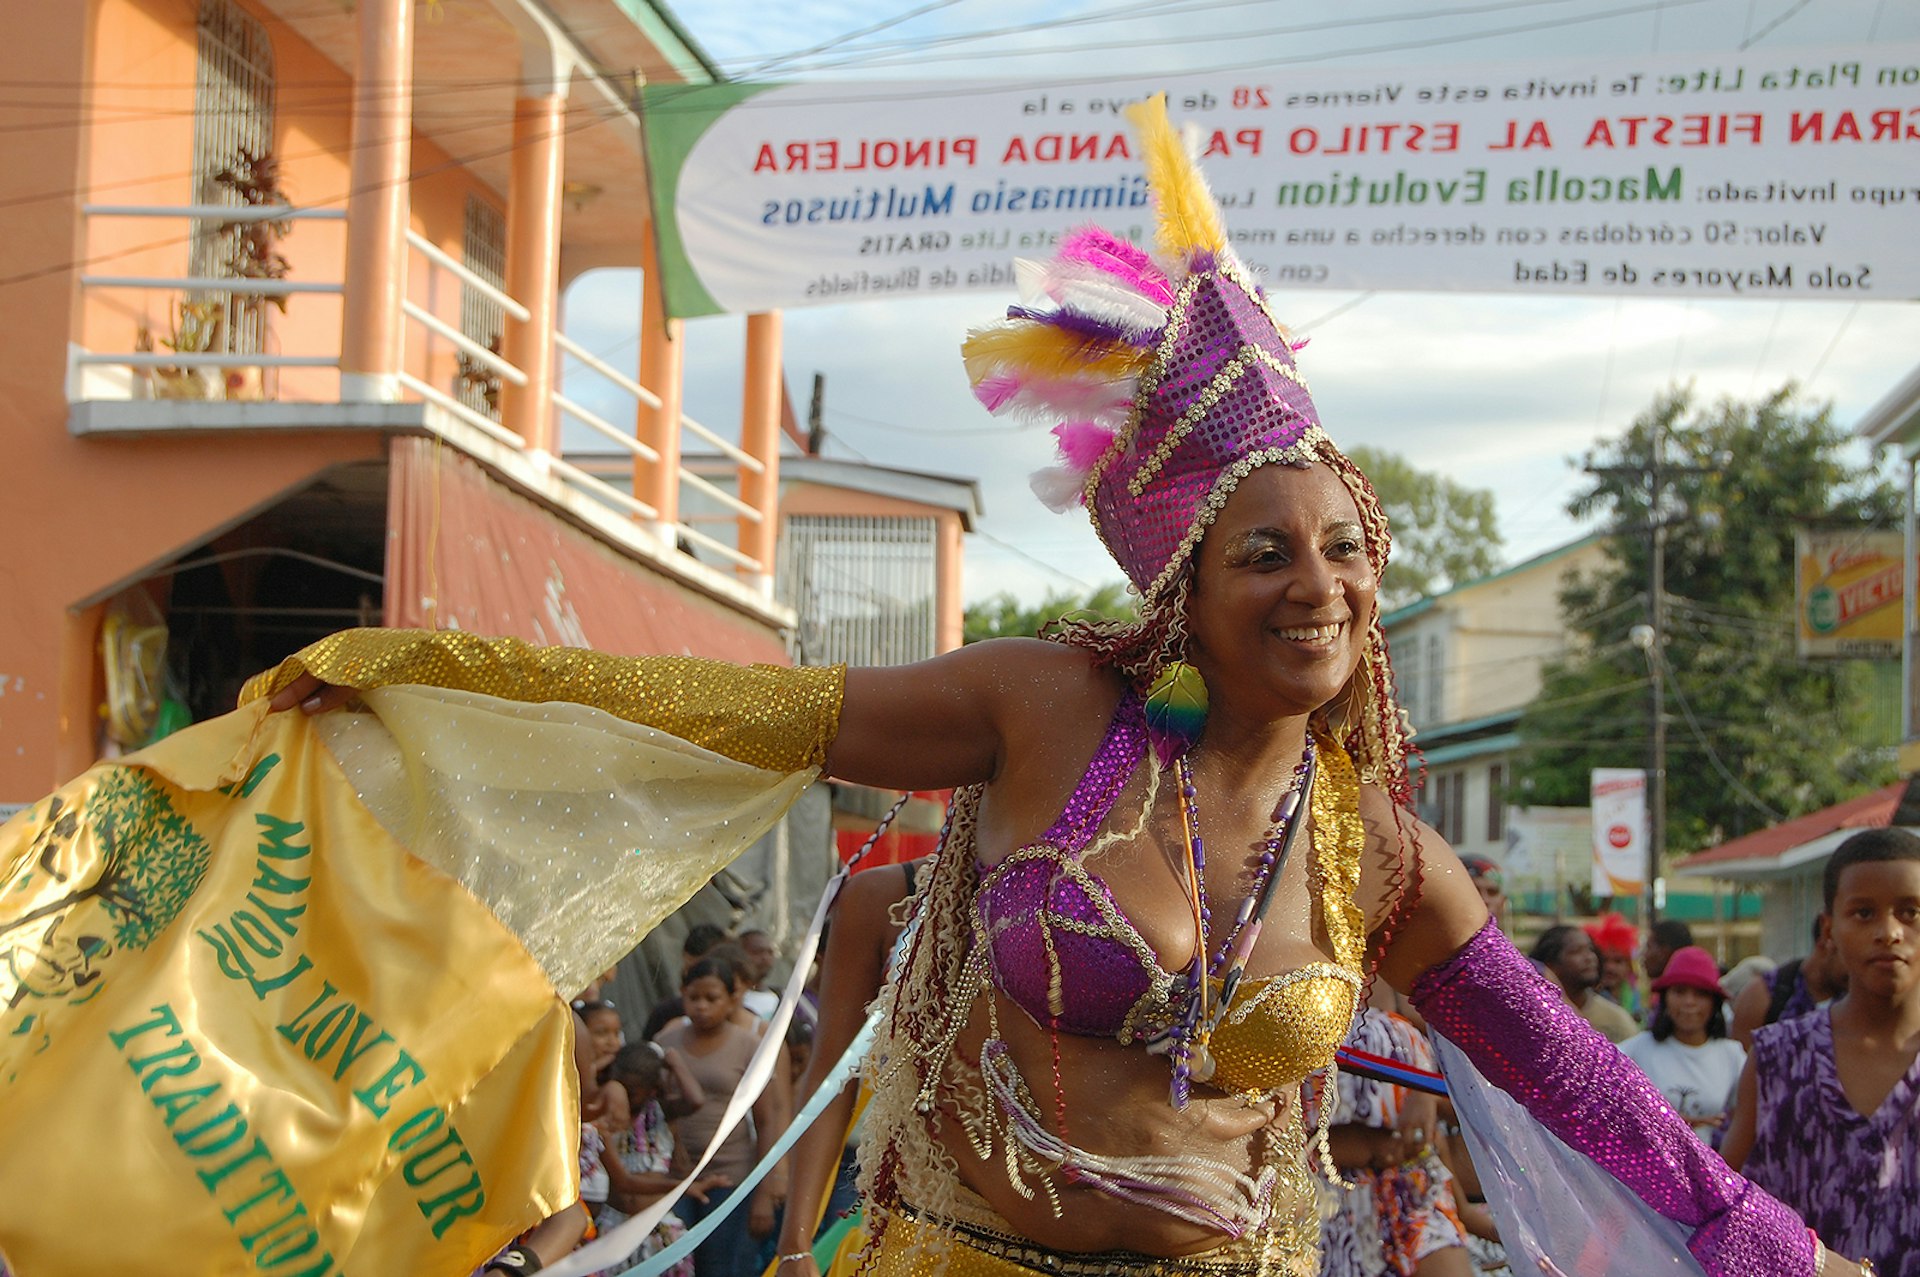 A Palo de Mayo reveler smiles during a street parade © Alex Egerton / Lonely Planet